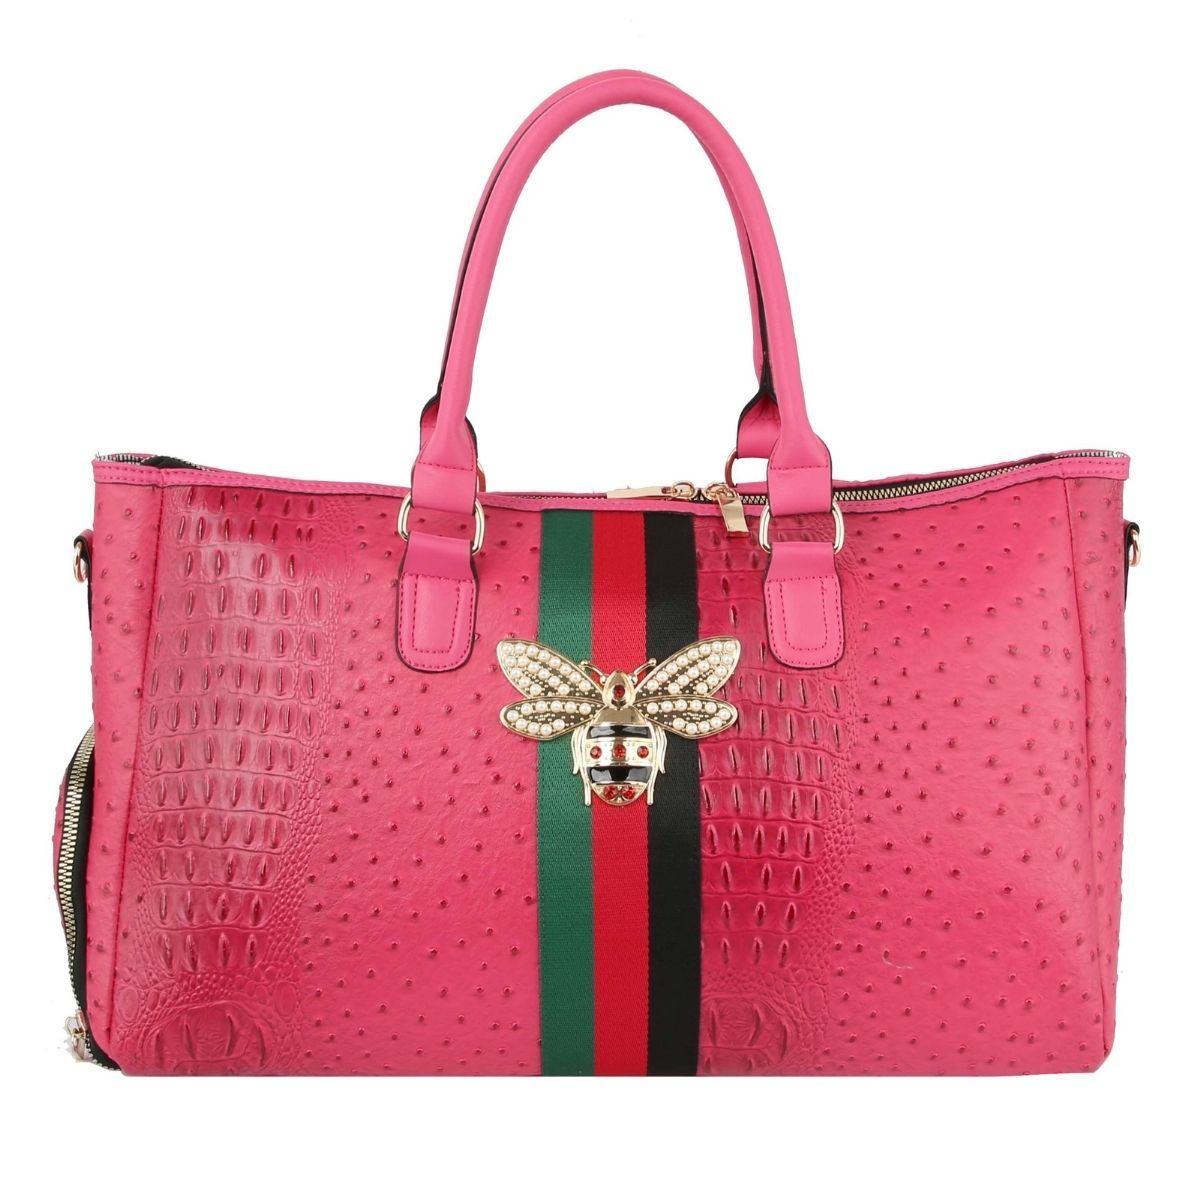 Designer Stripe Hot Pink Weekender - Premium Wholesale Fashion Accessories from Pinktown - Just $75! Shop now at chiquestyles